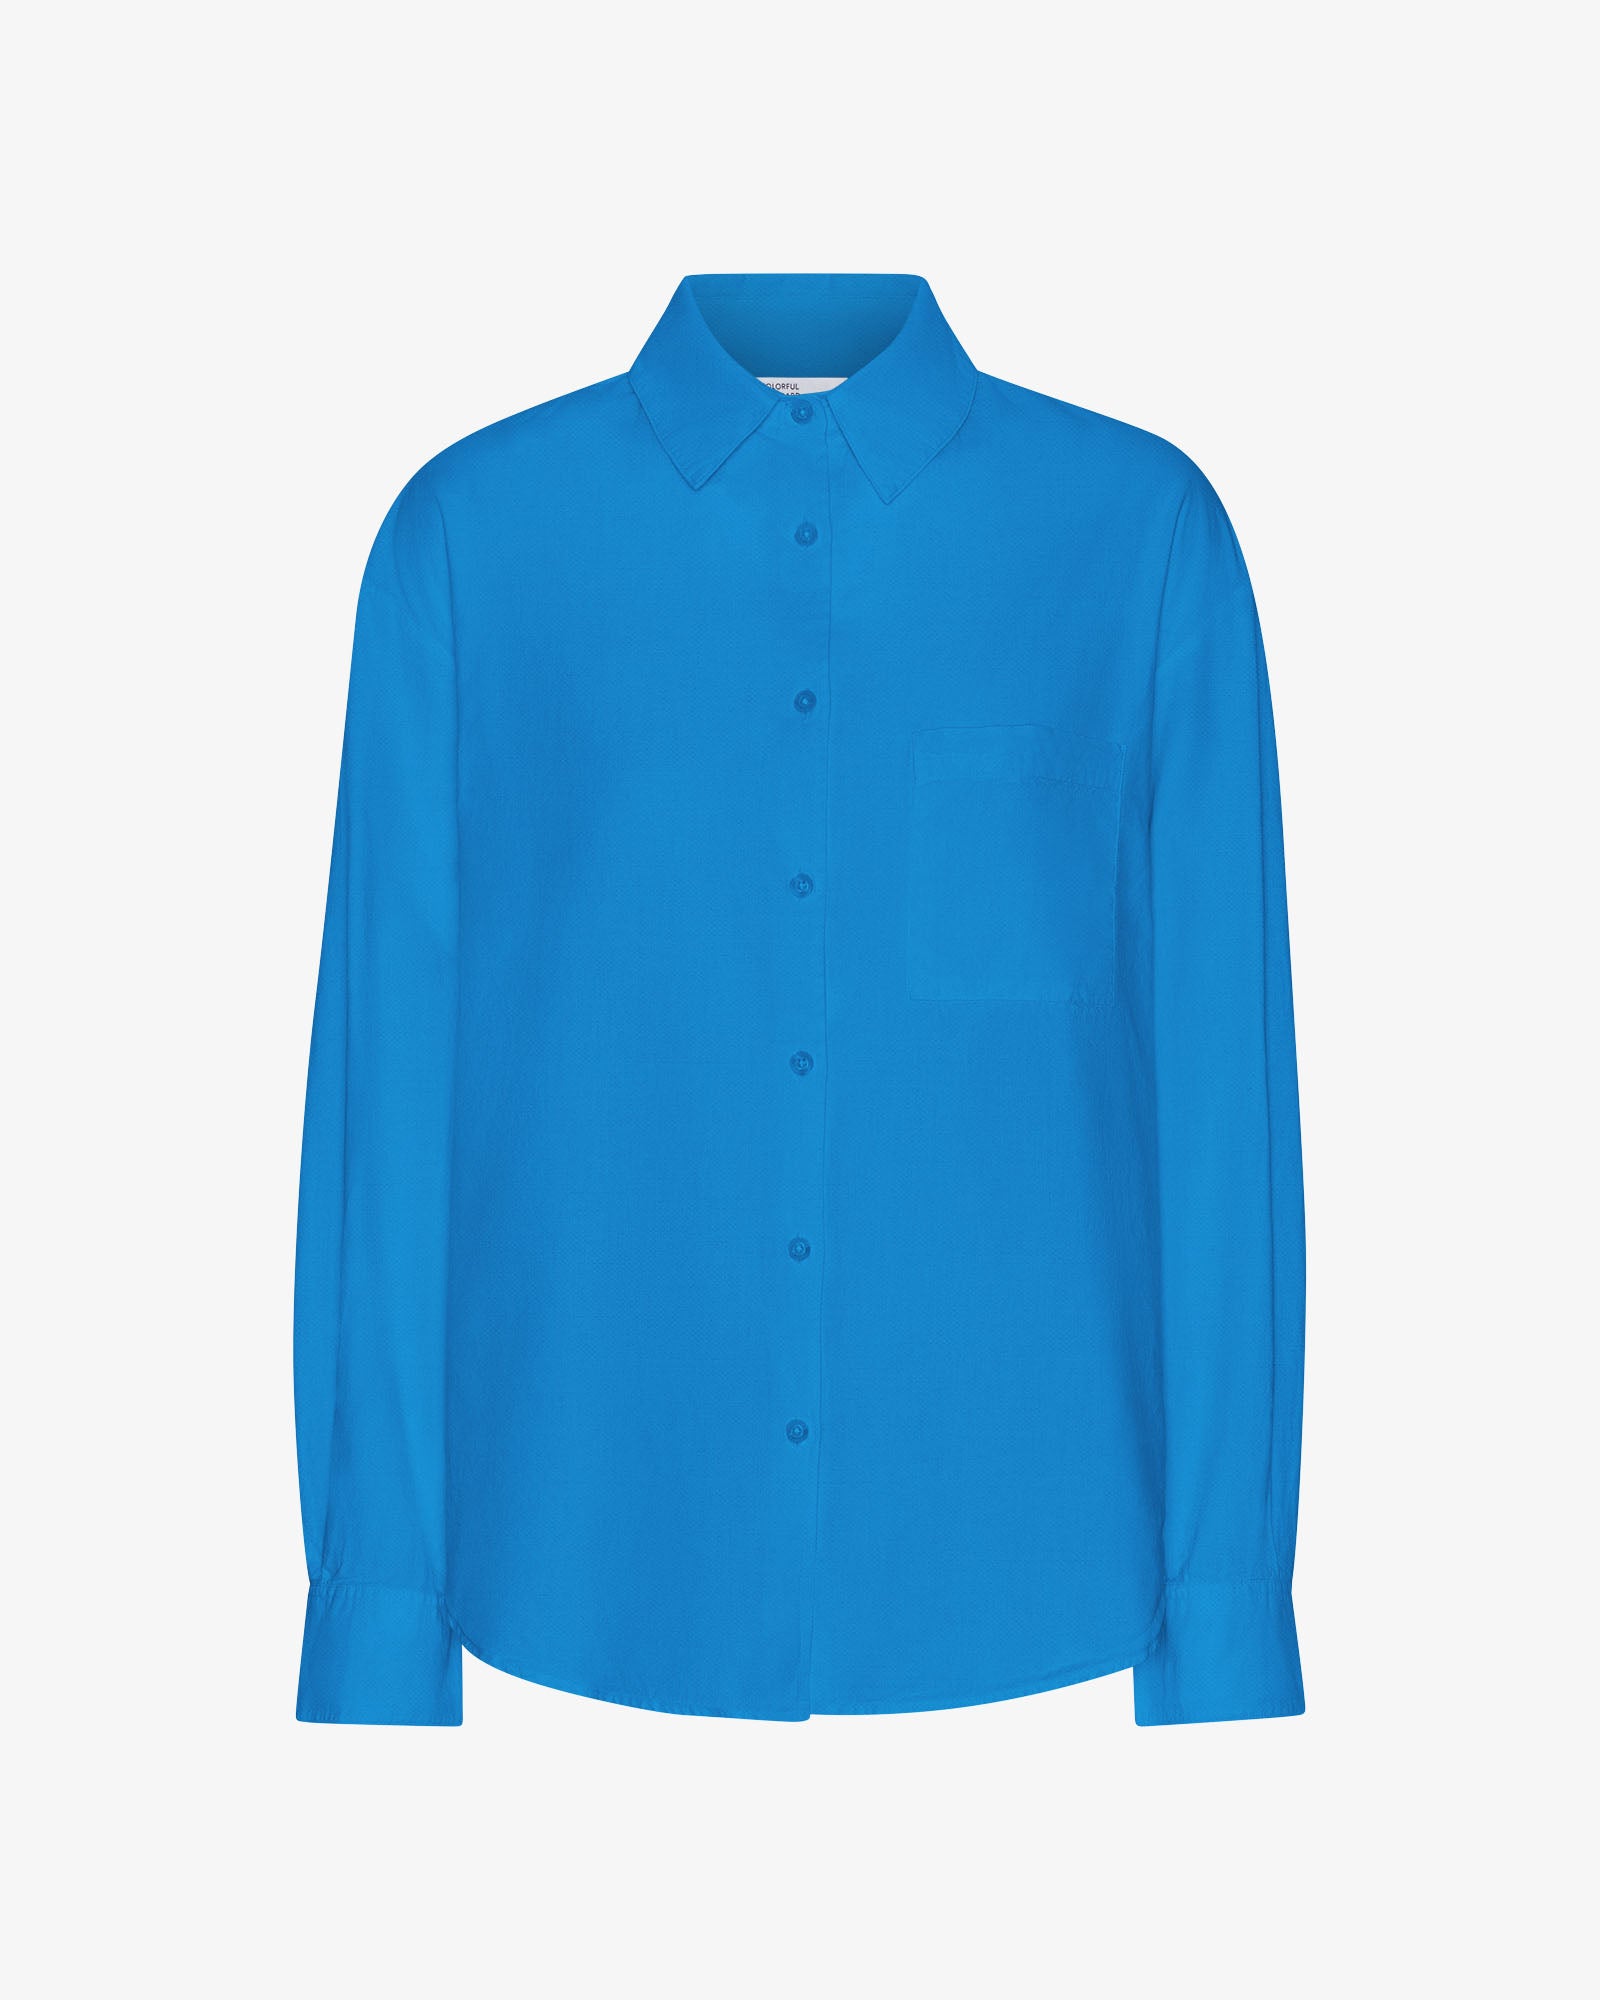 Kyodan activewear Womens Top Long Sleeve Shirt Size M Blue Yellow trim Zip